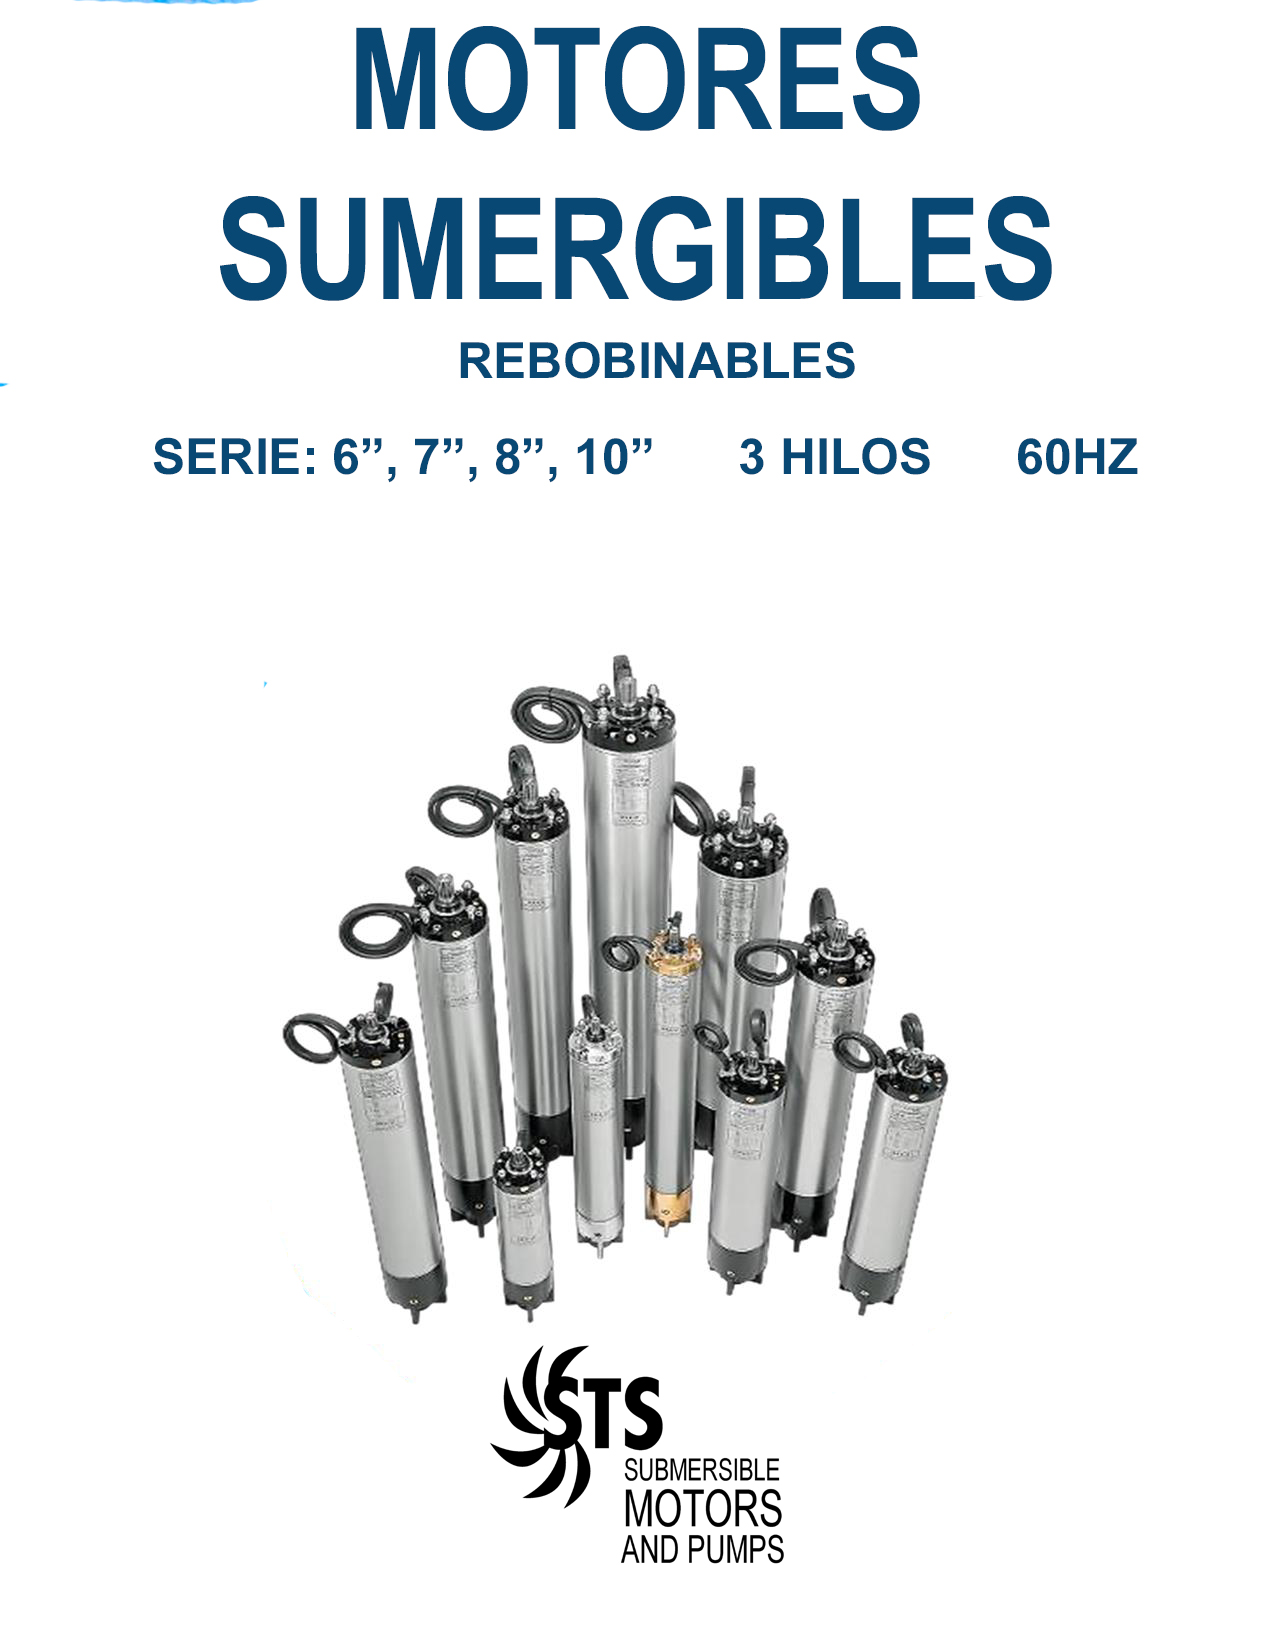 motores sumergibles rebobinables marca STS